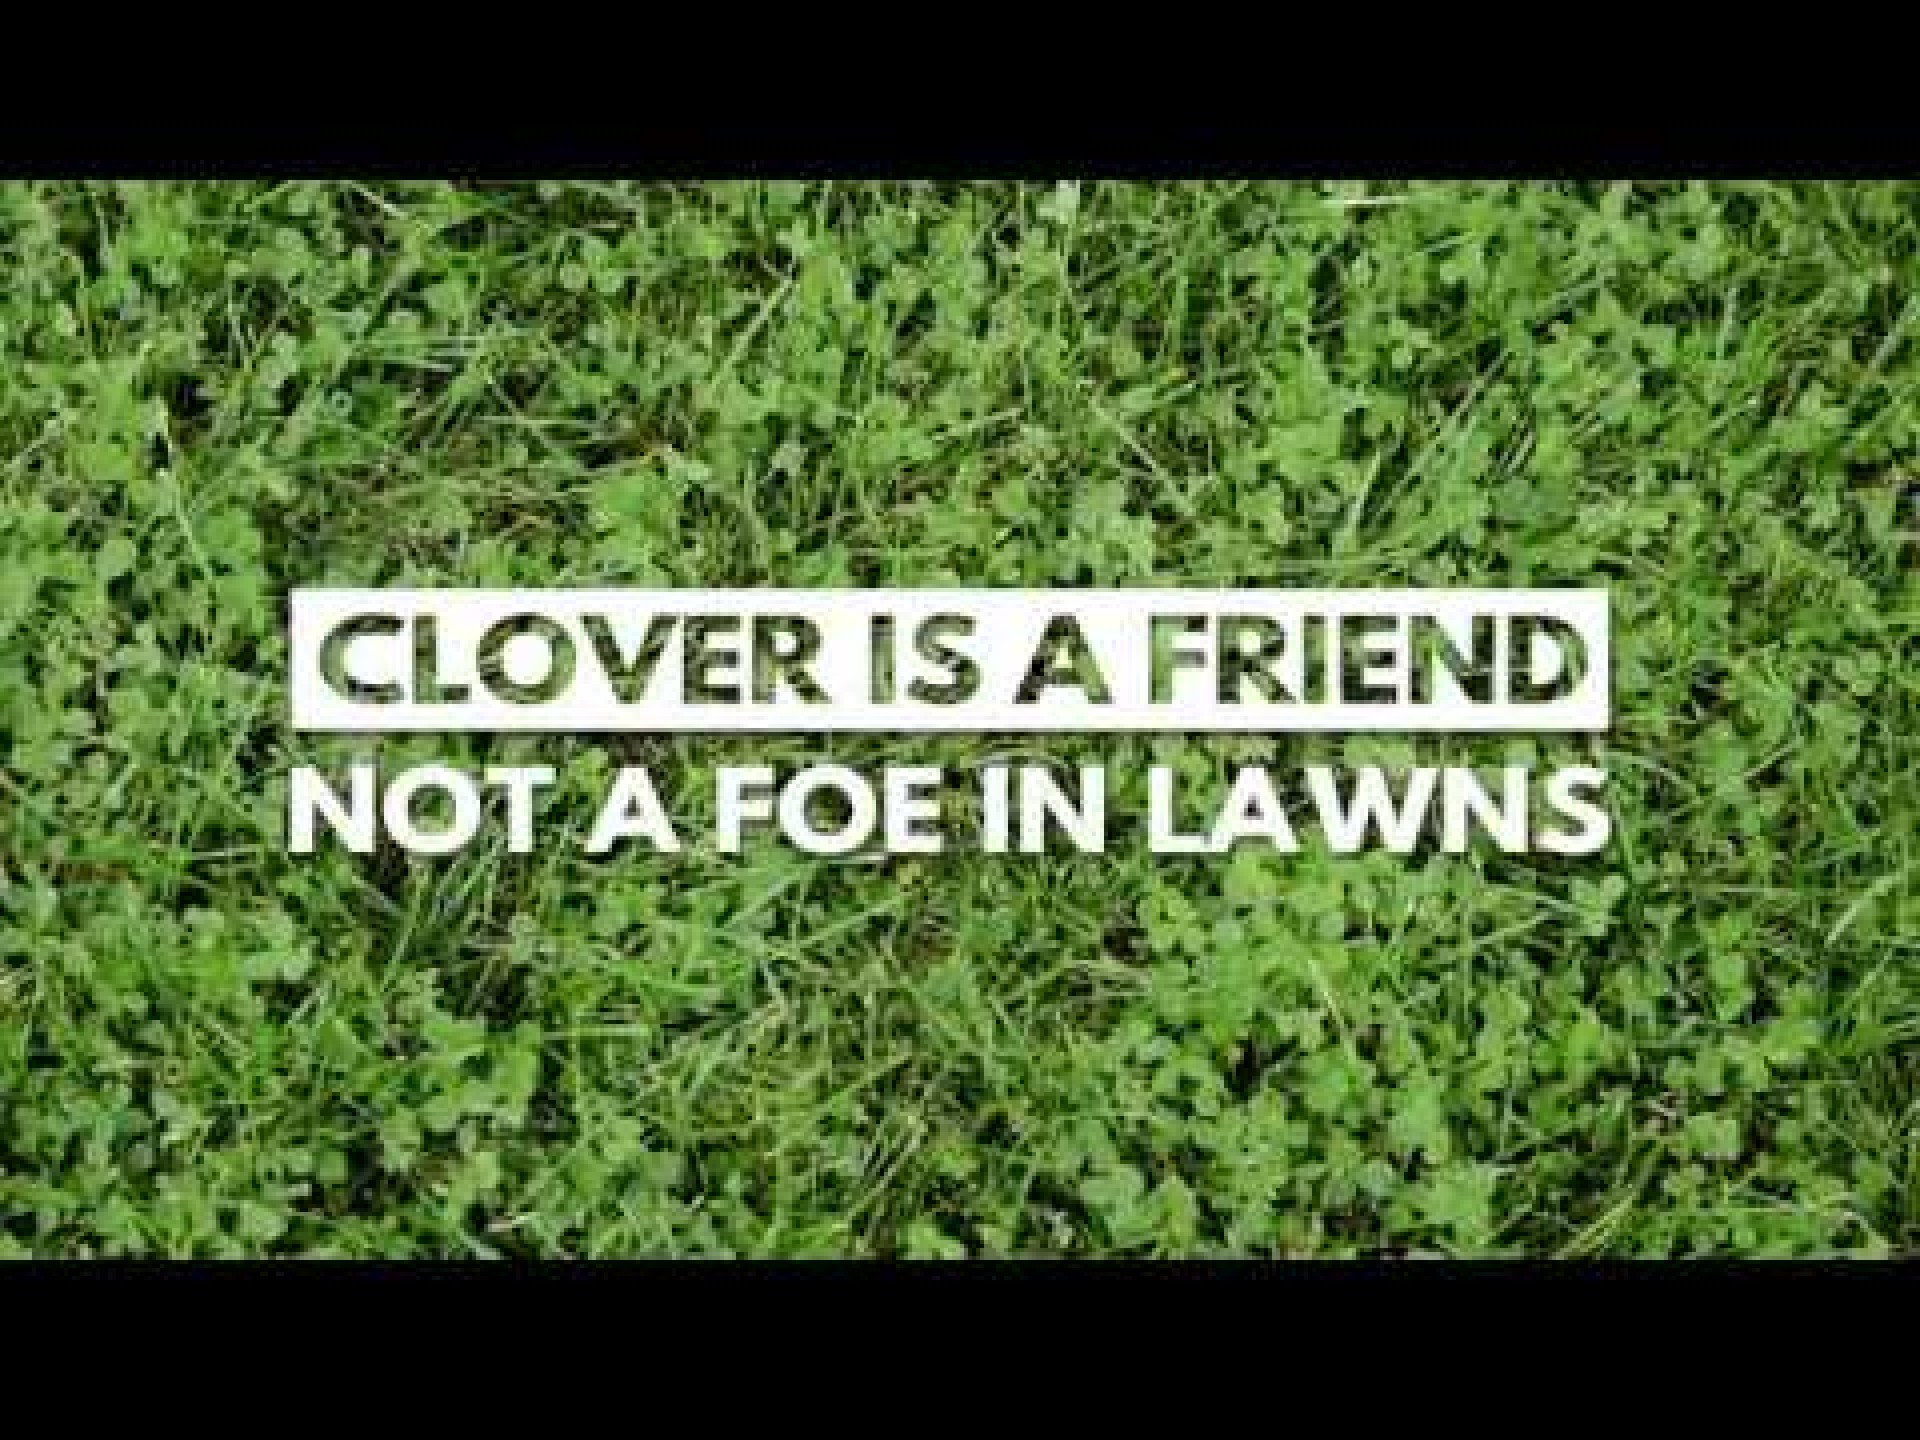 City of Kamloops - Clover is a friend, not a foe